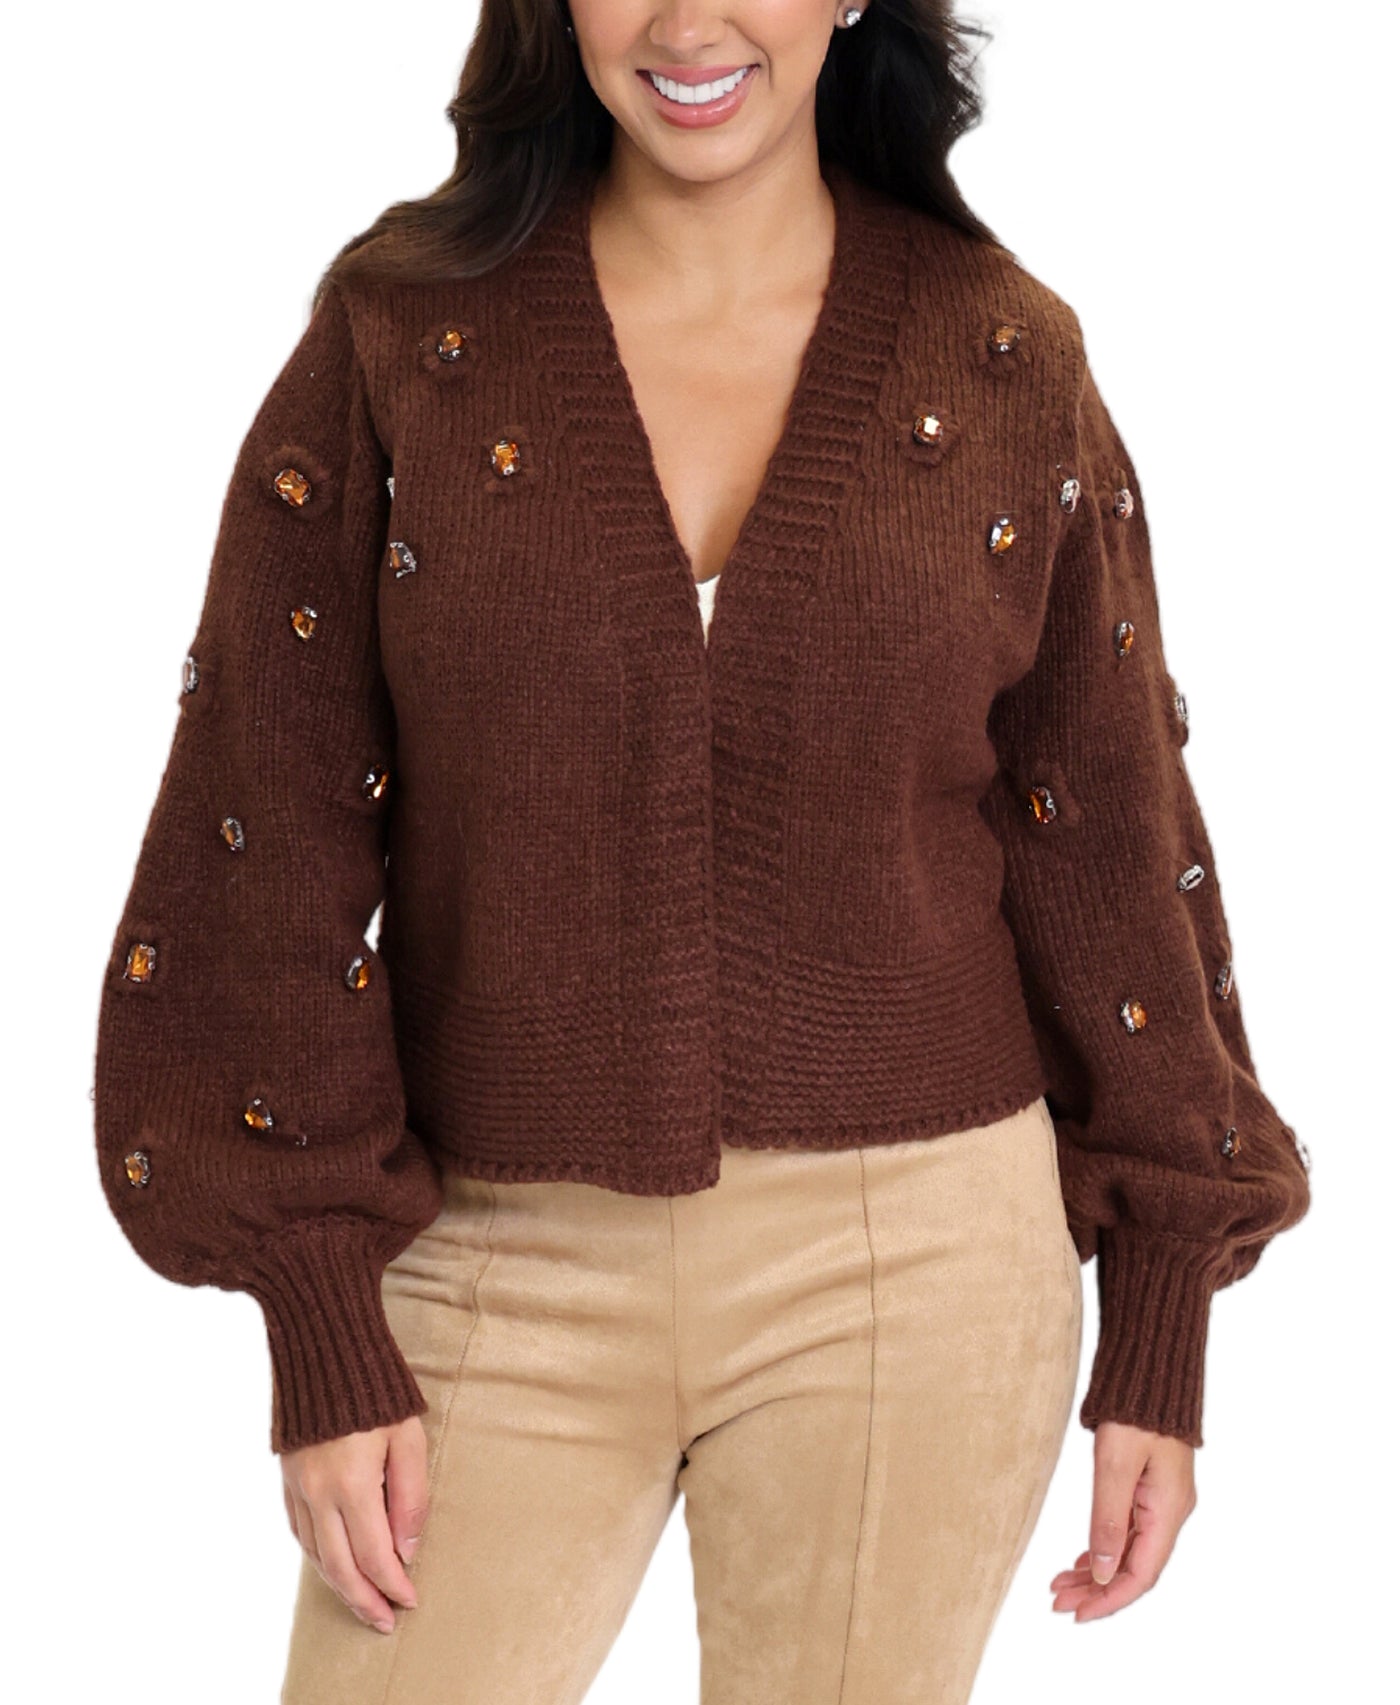 Jeweled Cardigan Sweater image 1